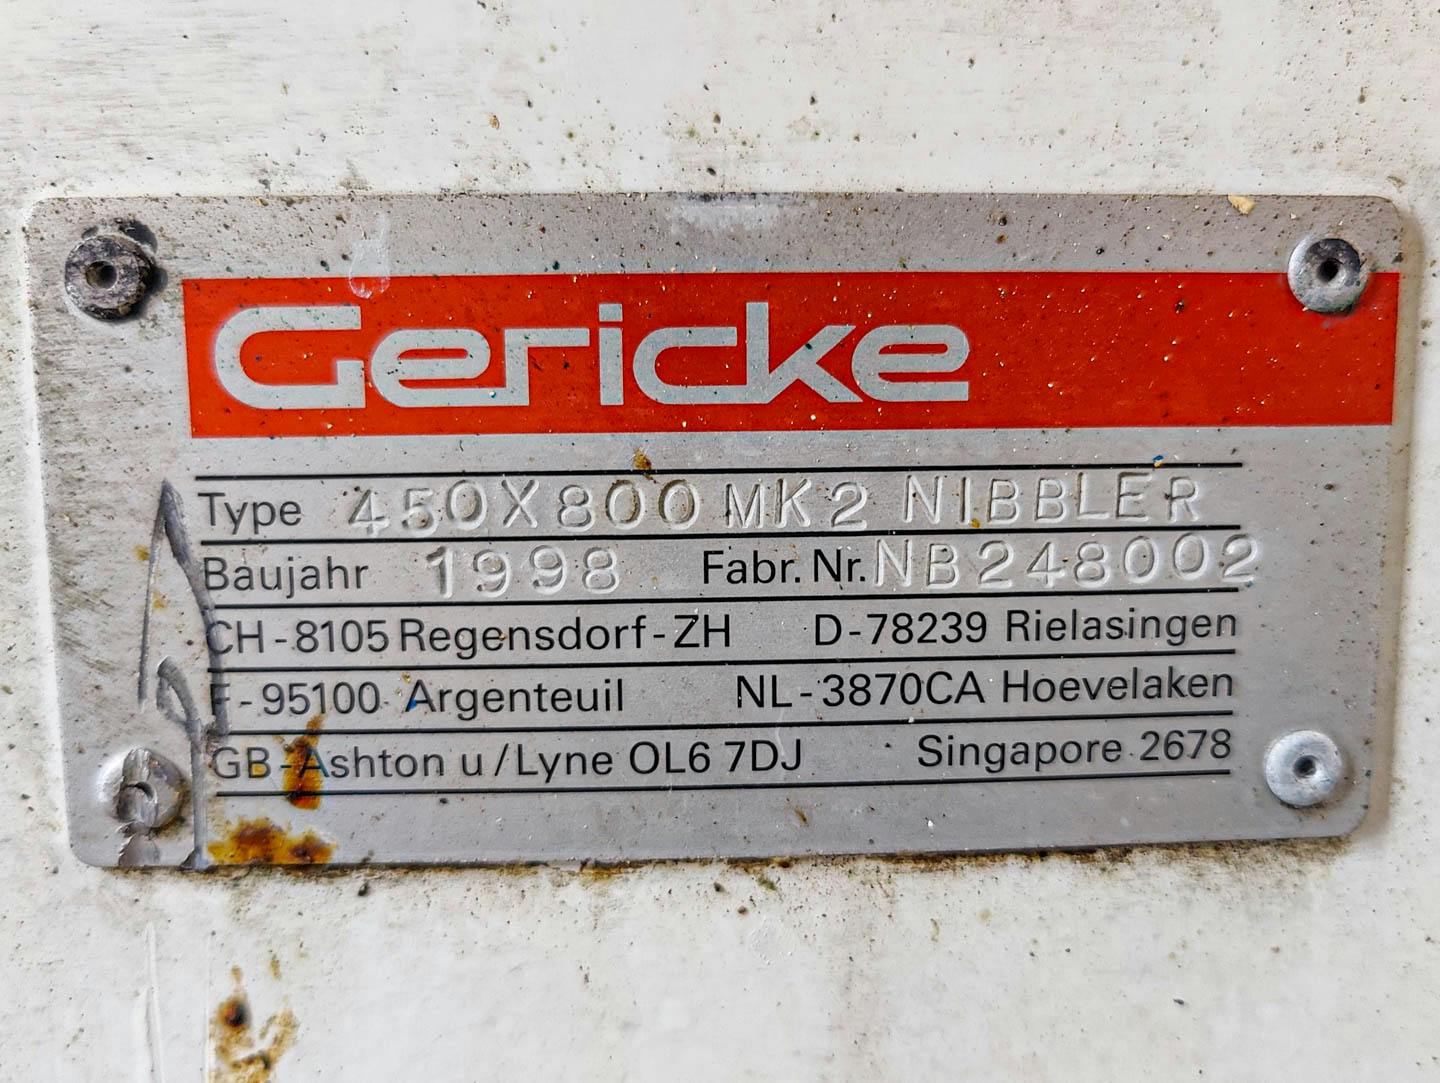 Gericke 450x800 MK2 NIBBLER - Granulator sitowy - image 11